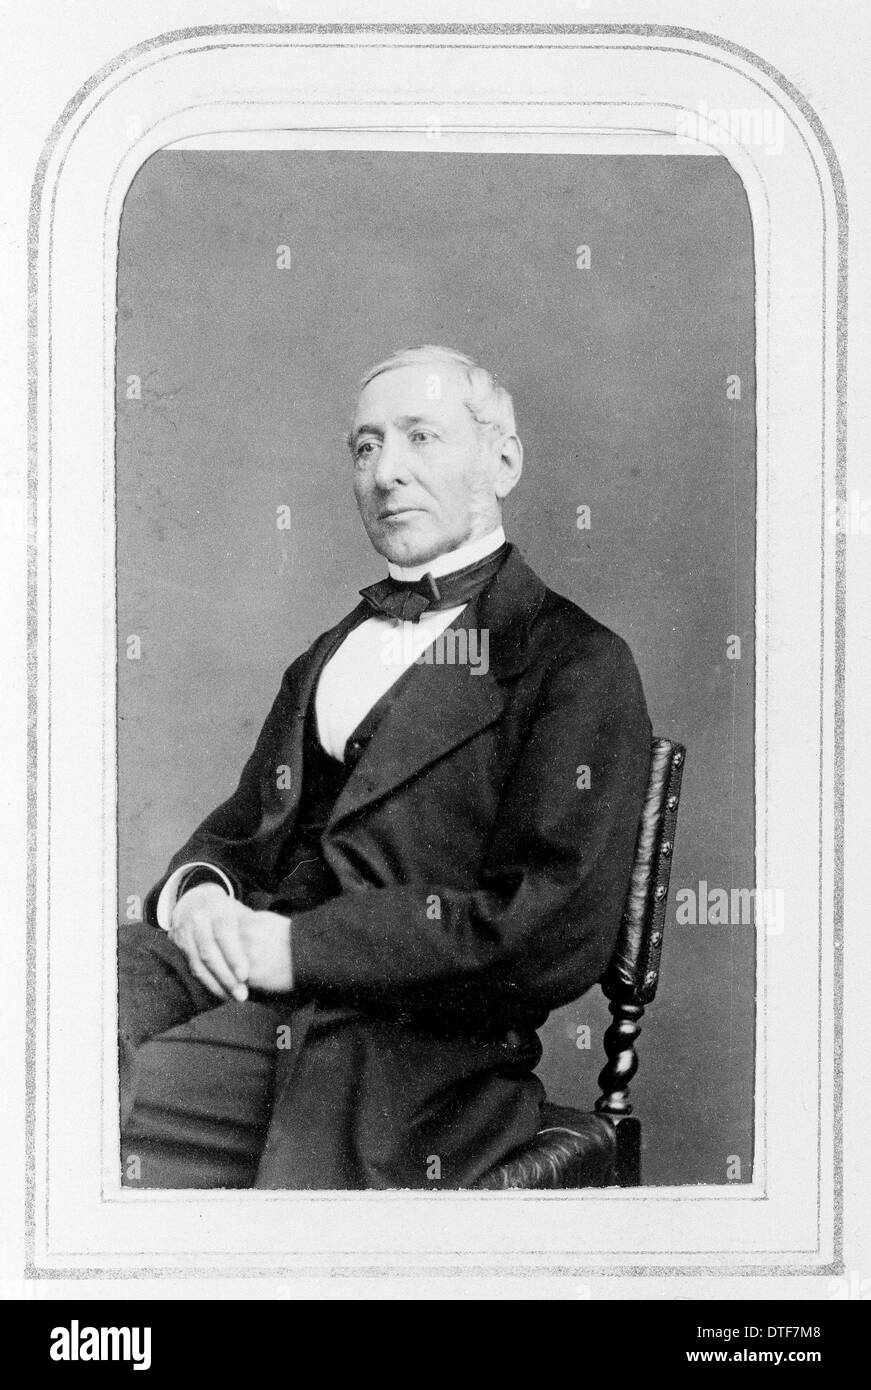 Alphonse de Candolle (1806-1893) Stock Photo